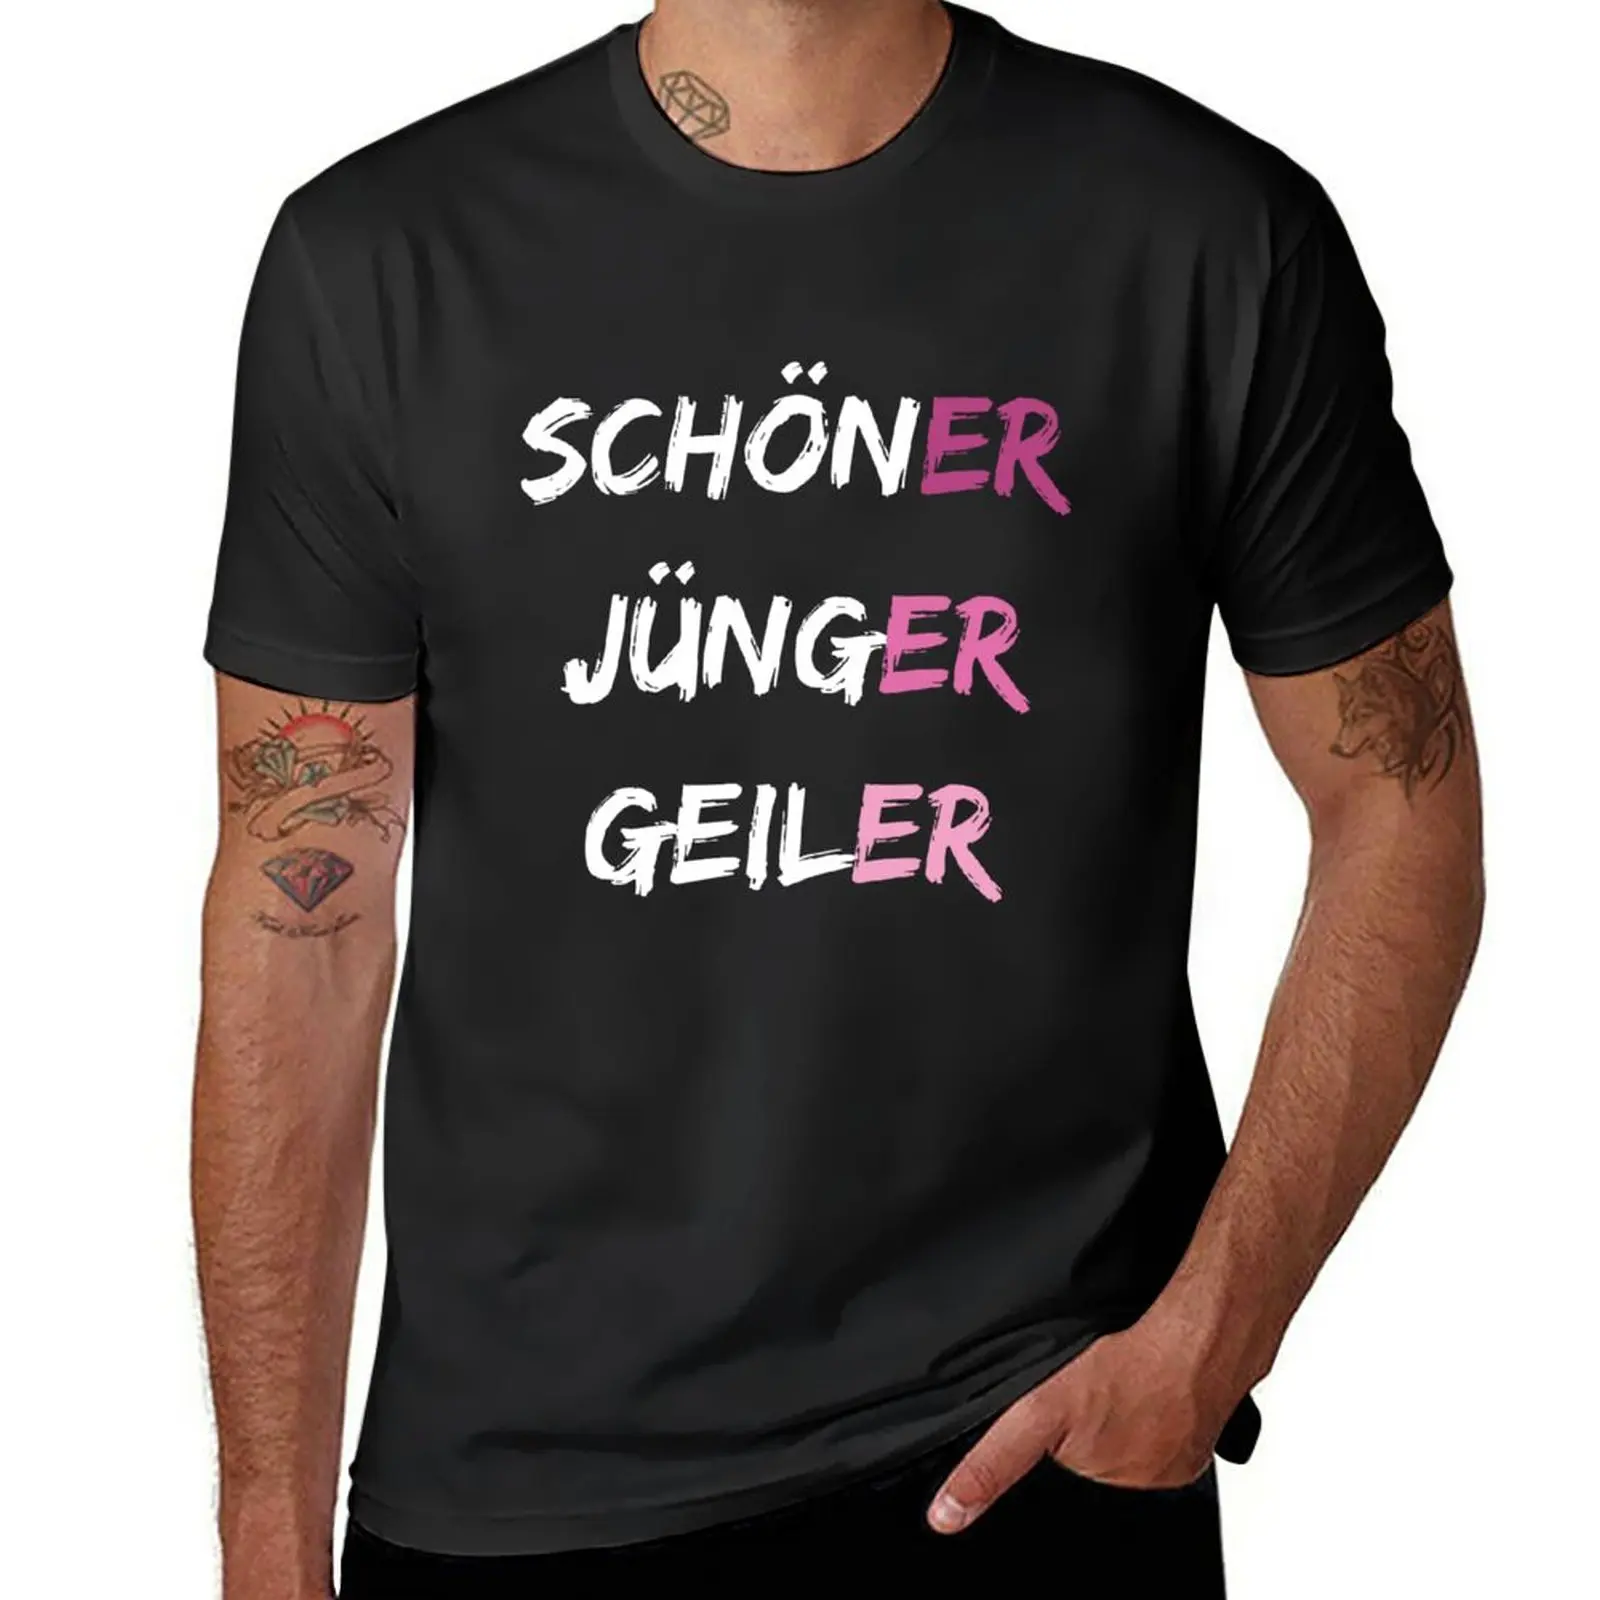 

New Schner Jünger Geiler, Mallorca Malle Party Glitch T-Shirt anime tops black t shirts for men